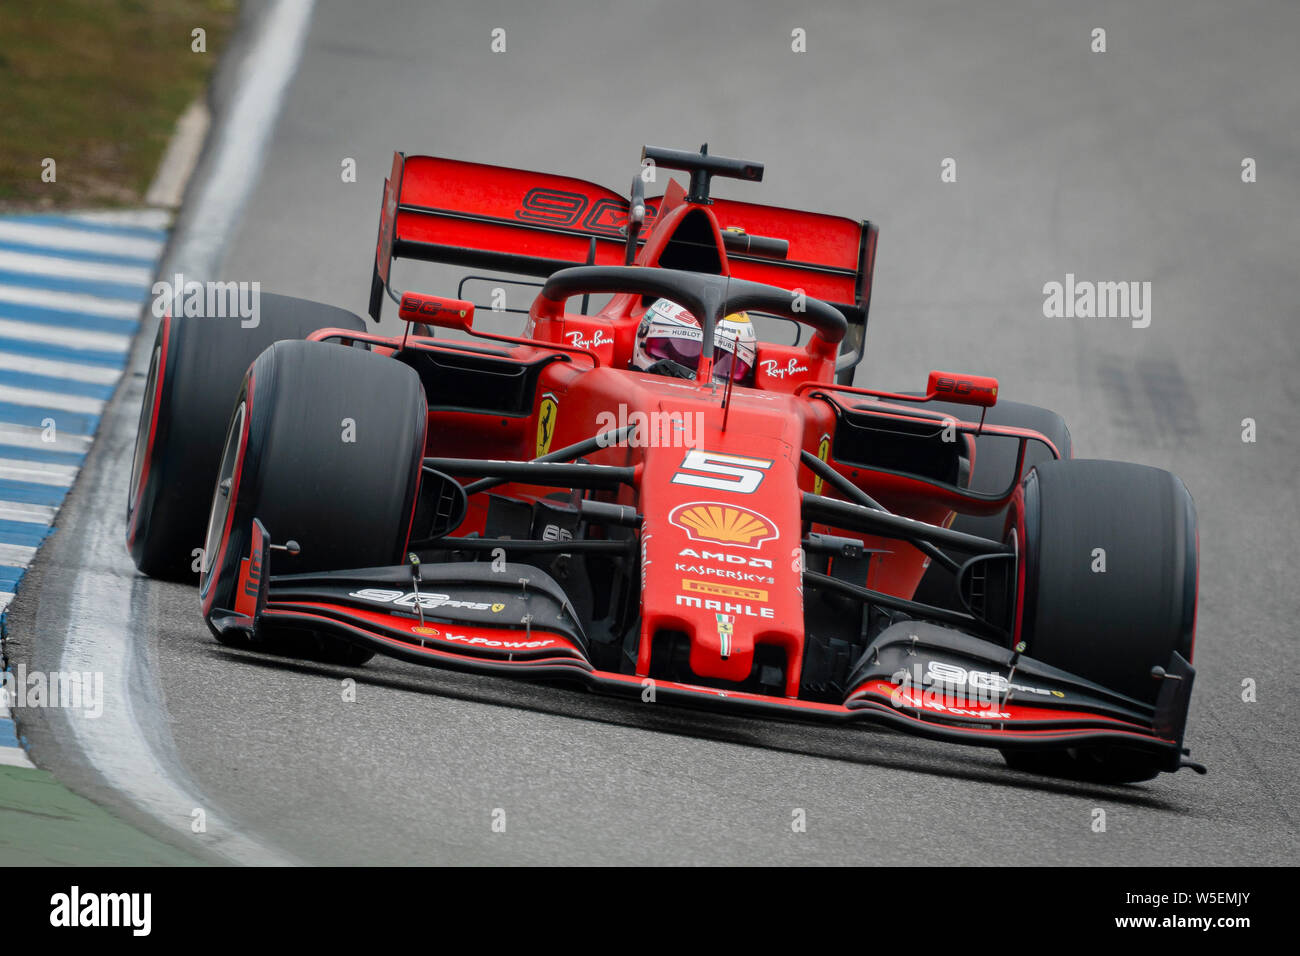 Hockenheim, Germany. 28th July, 2019. Scuderia Ferrari's German driver Sebastian Vettel competes during the German F1 Grand Prix race. Credit: SOPA Images Limited/Alamy Live News Stock Photo